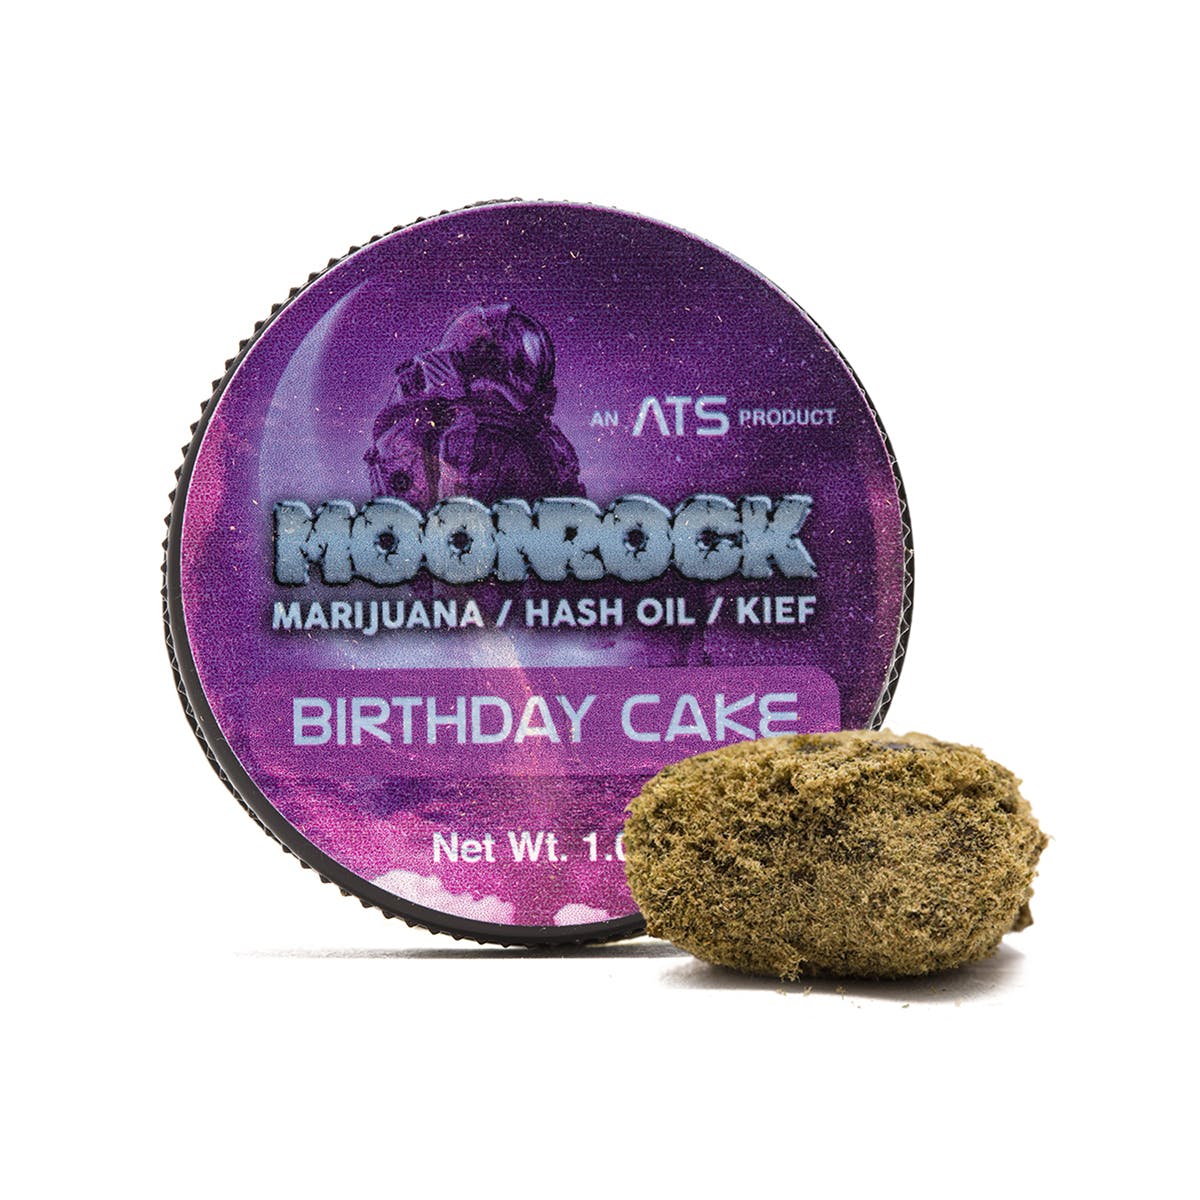 marijuana-dispensaries-temple-of-joy-21-healing-center-in-fallbrook-birthday-cake-moonrocks